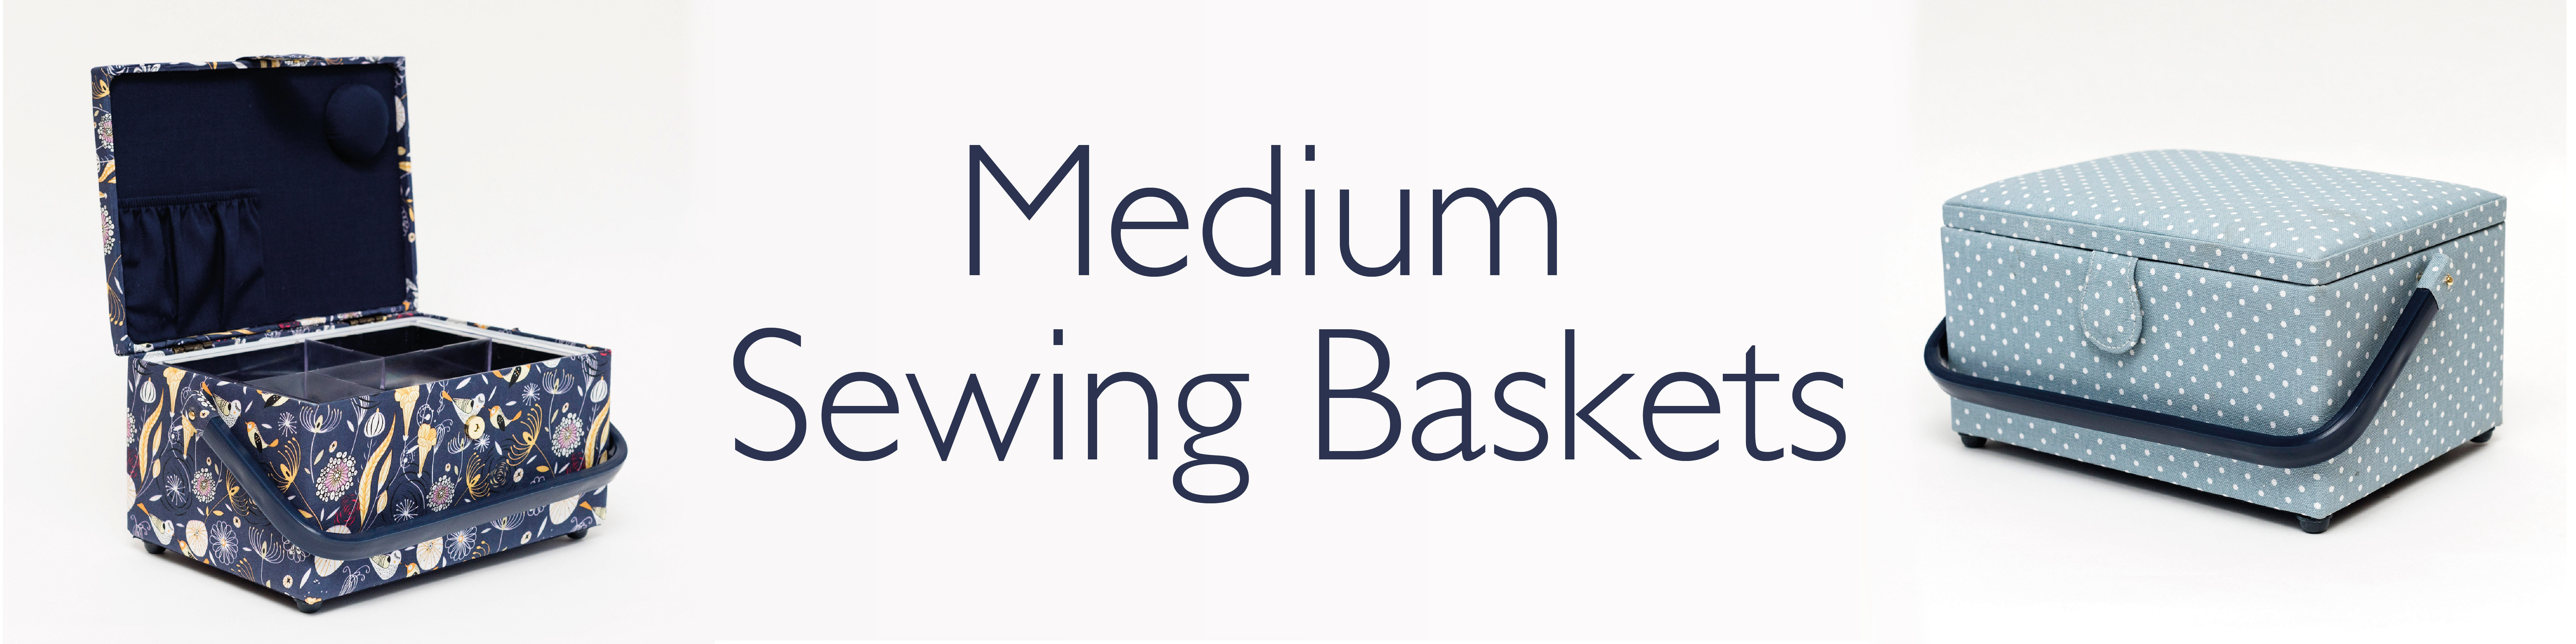 Medium Sewing Baskets